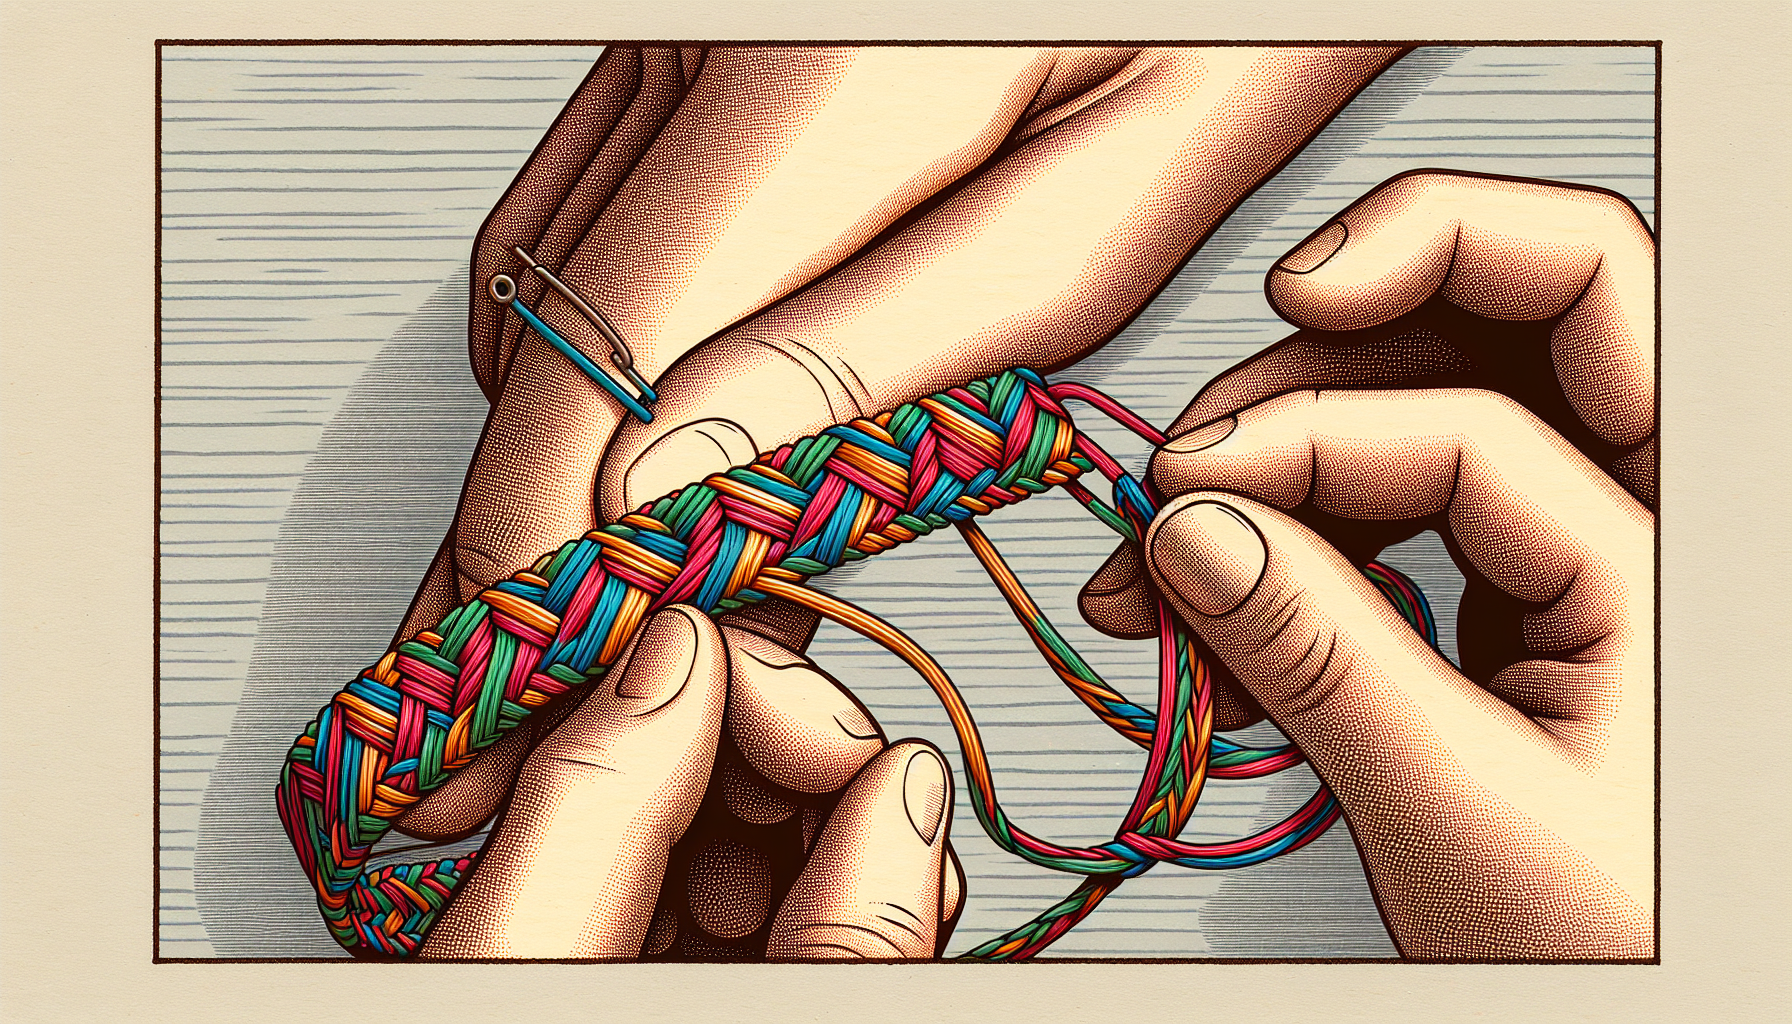 Illustration of securing and sealing a friendship bracelet